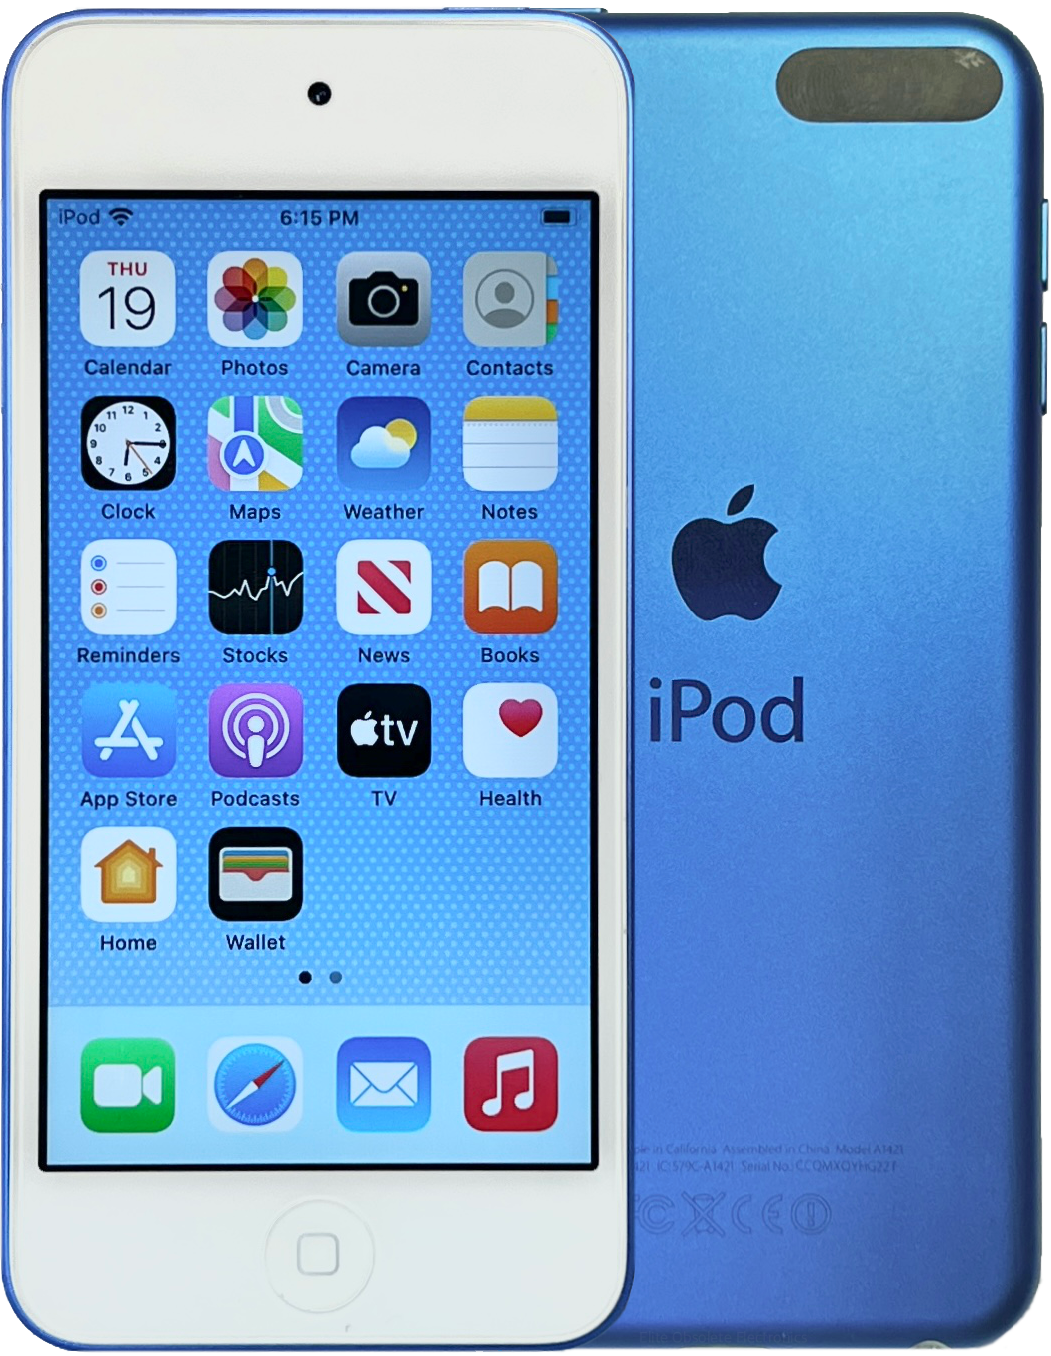 Used Apple iPod Touch 6th Generation Blue 16GB 32GB 128GB A1574 MKH22LL/A MKHV2LL/A MKWP2LL/A